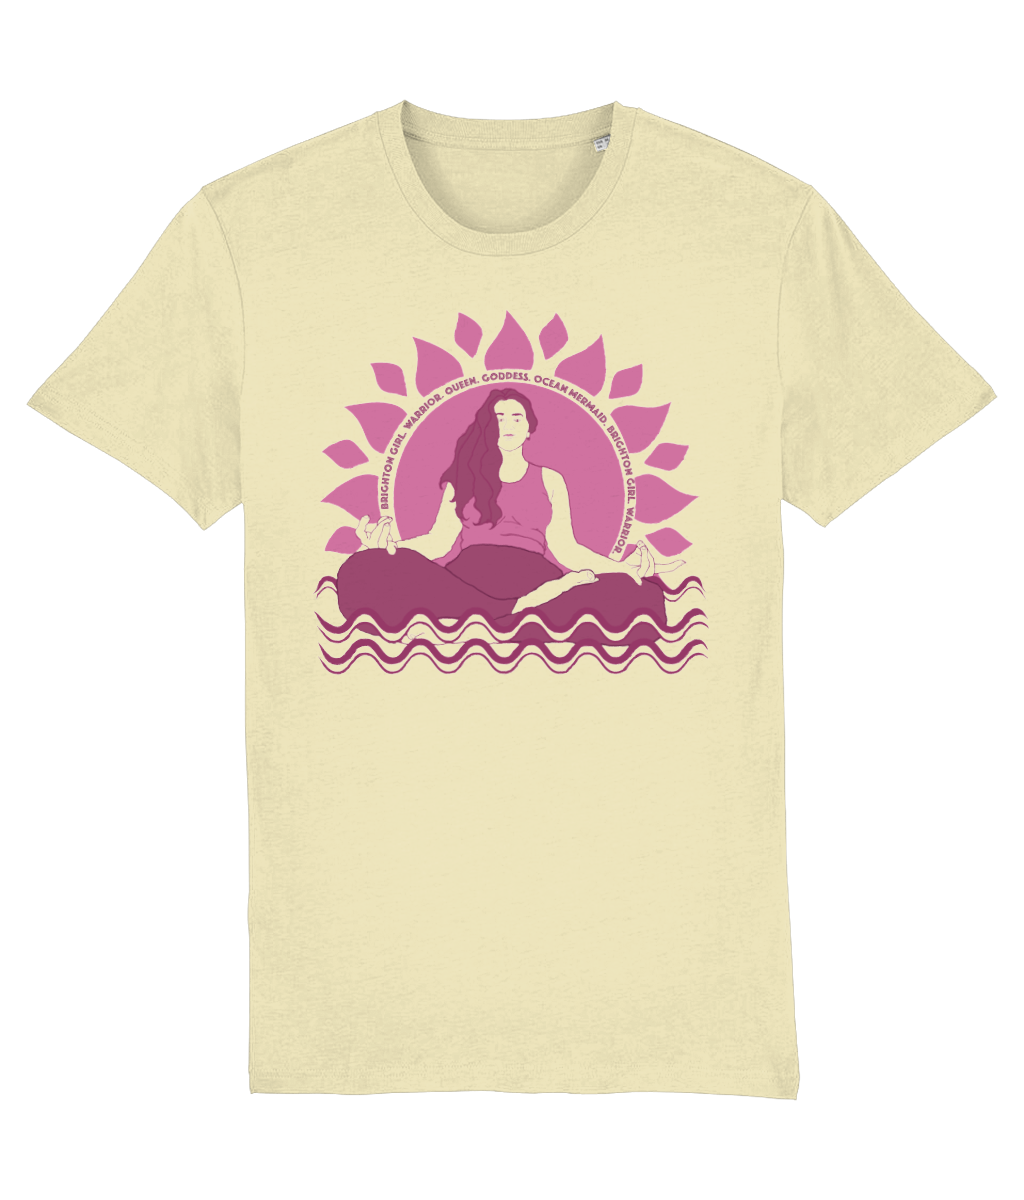 Brighton Girl Teeshirt - Saskia Kelly design (Adult Size)